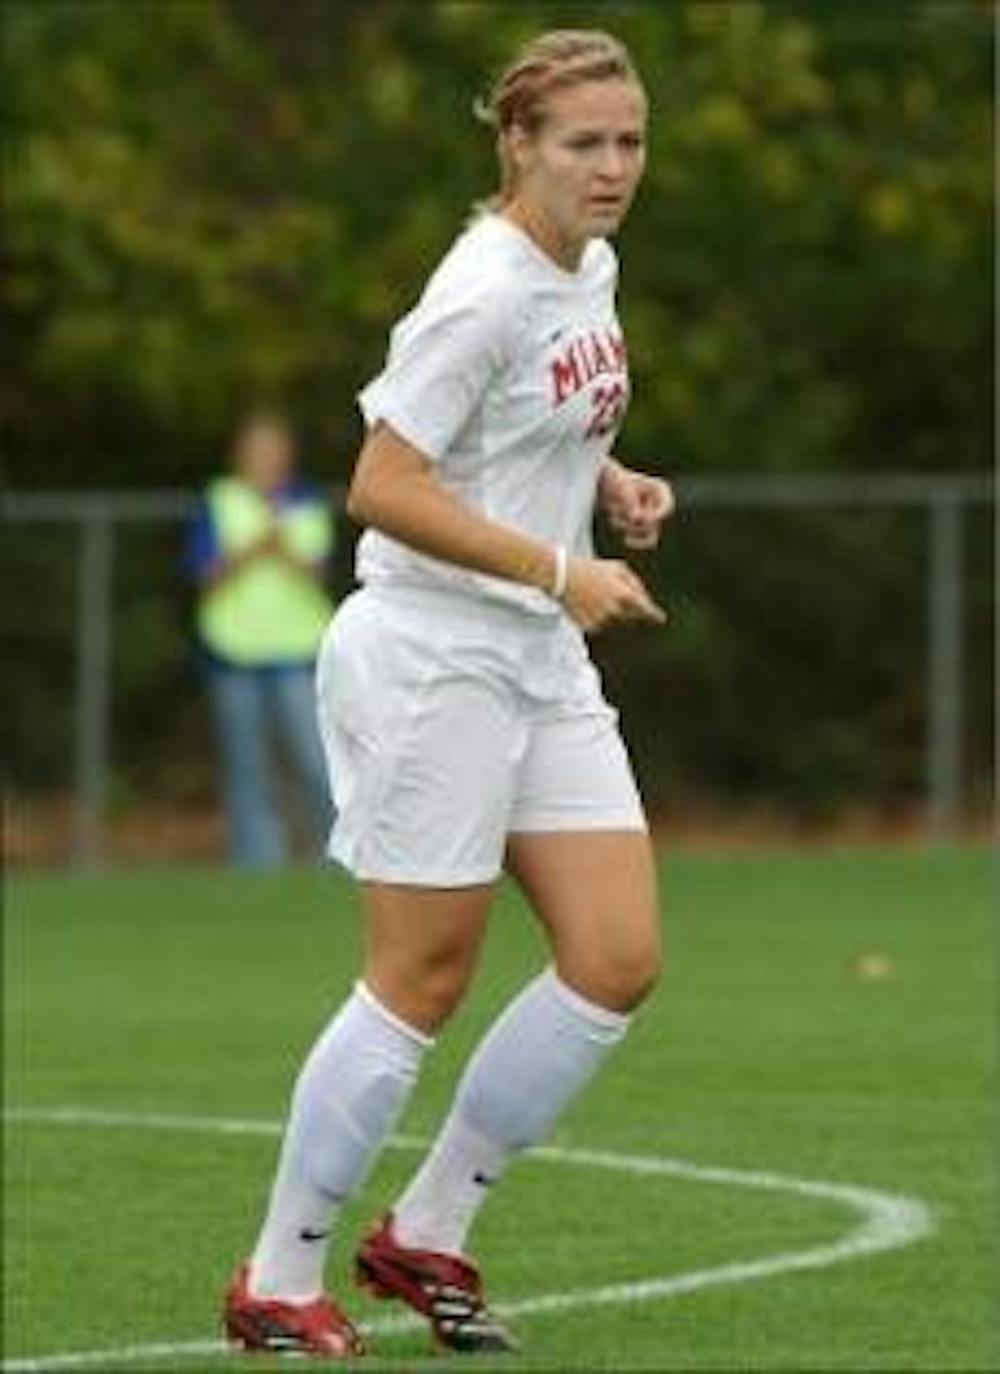 Senior forward Allison Berkey plays soccer for the team she grew up watching.